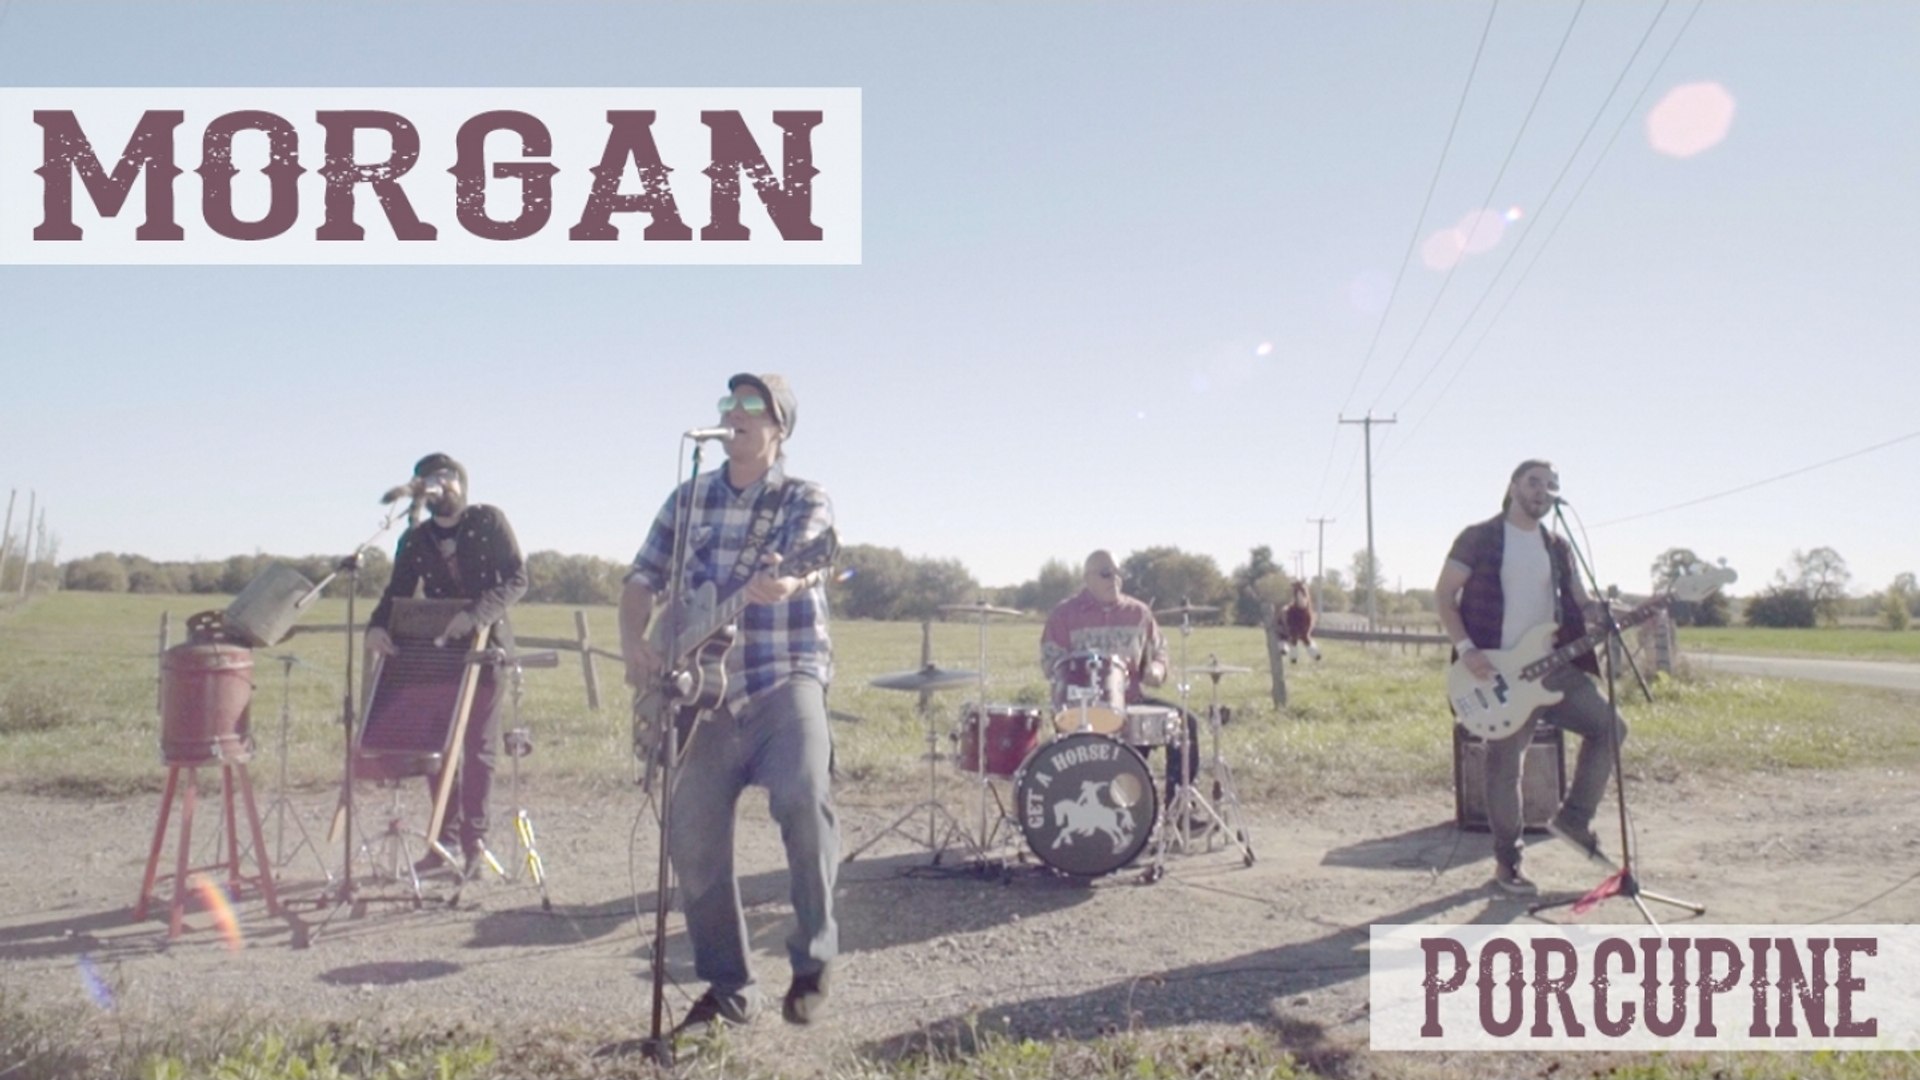 Morgan - Porcupine (official video)